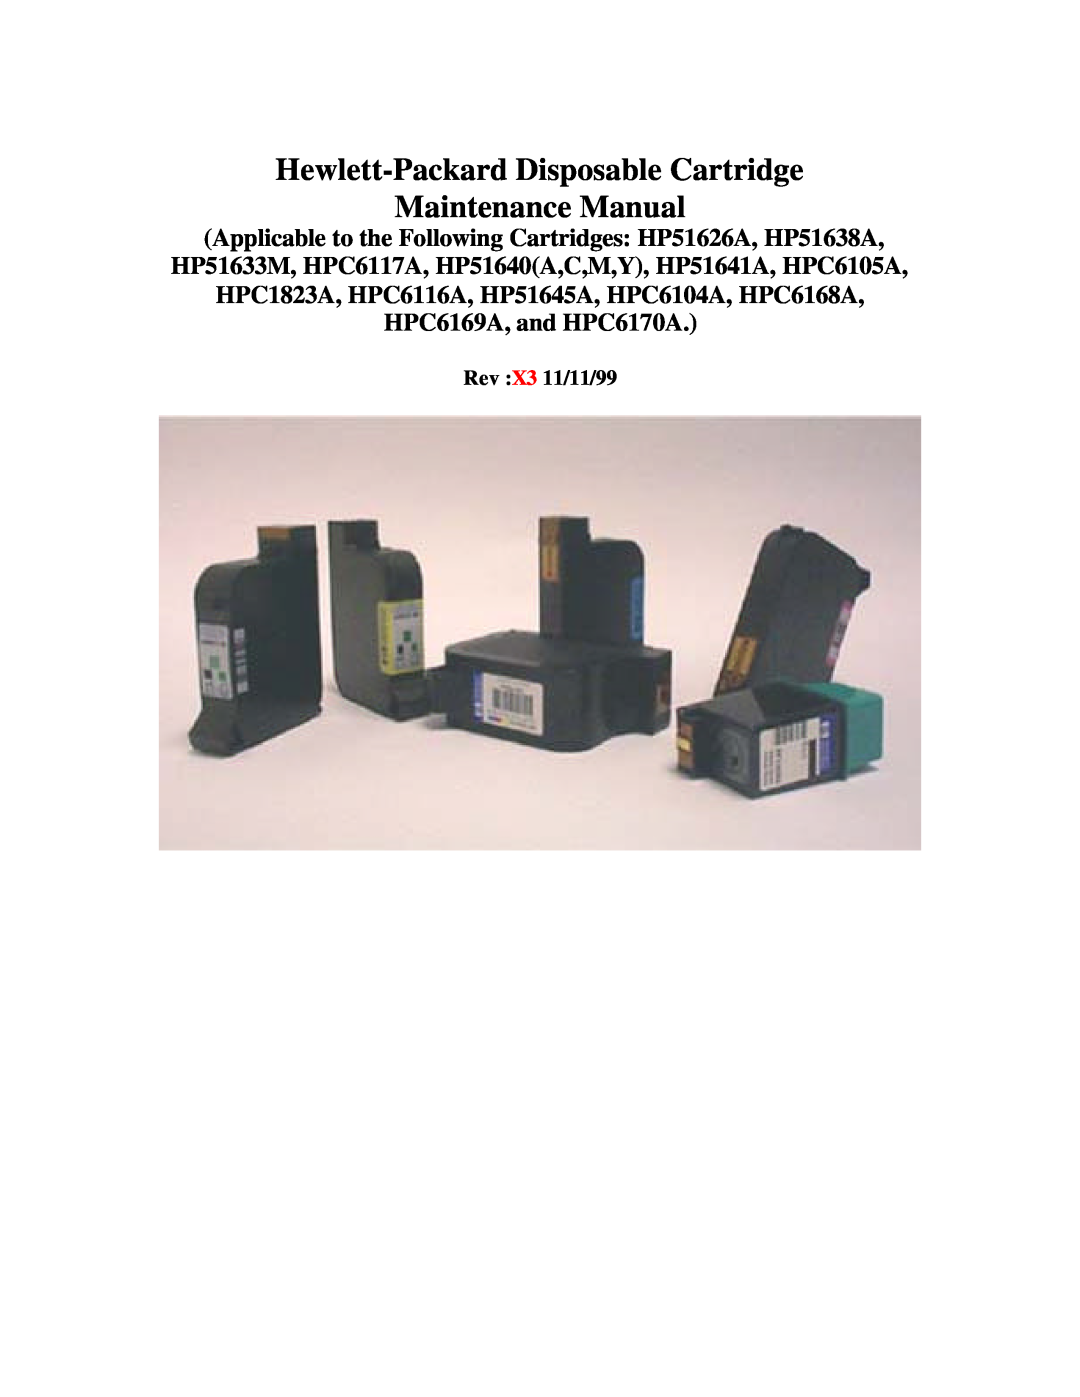 HP 51645A, 51640, 51641A, 51626A, 51638A manual Rev X3 11/11/99, Hewlett-Packard Disposable Cartridge Maintenance Manual 